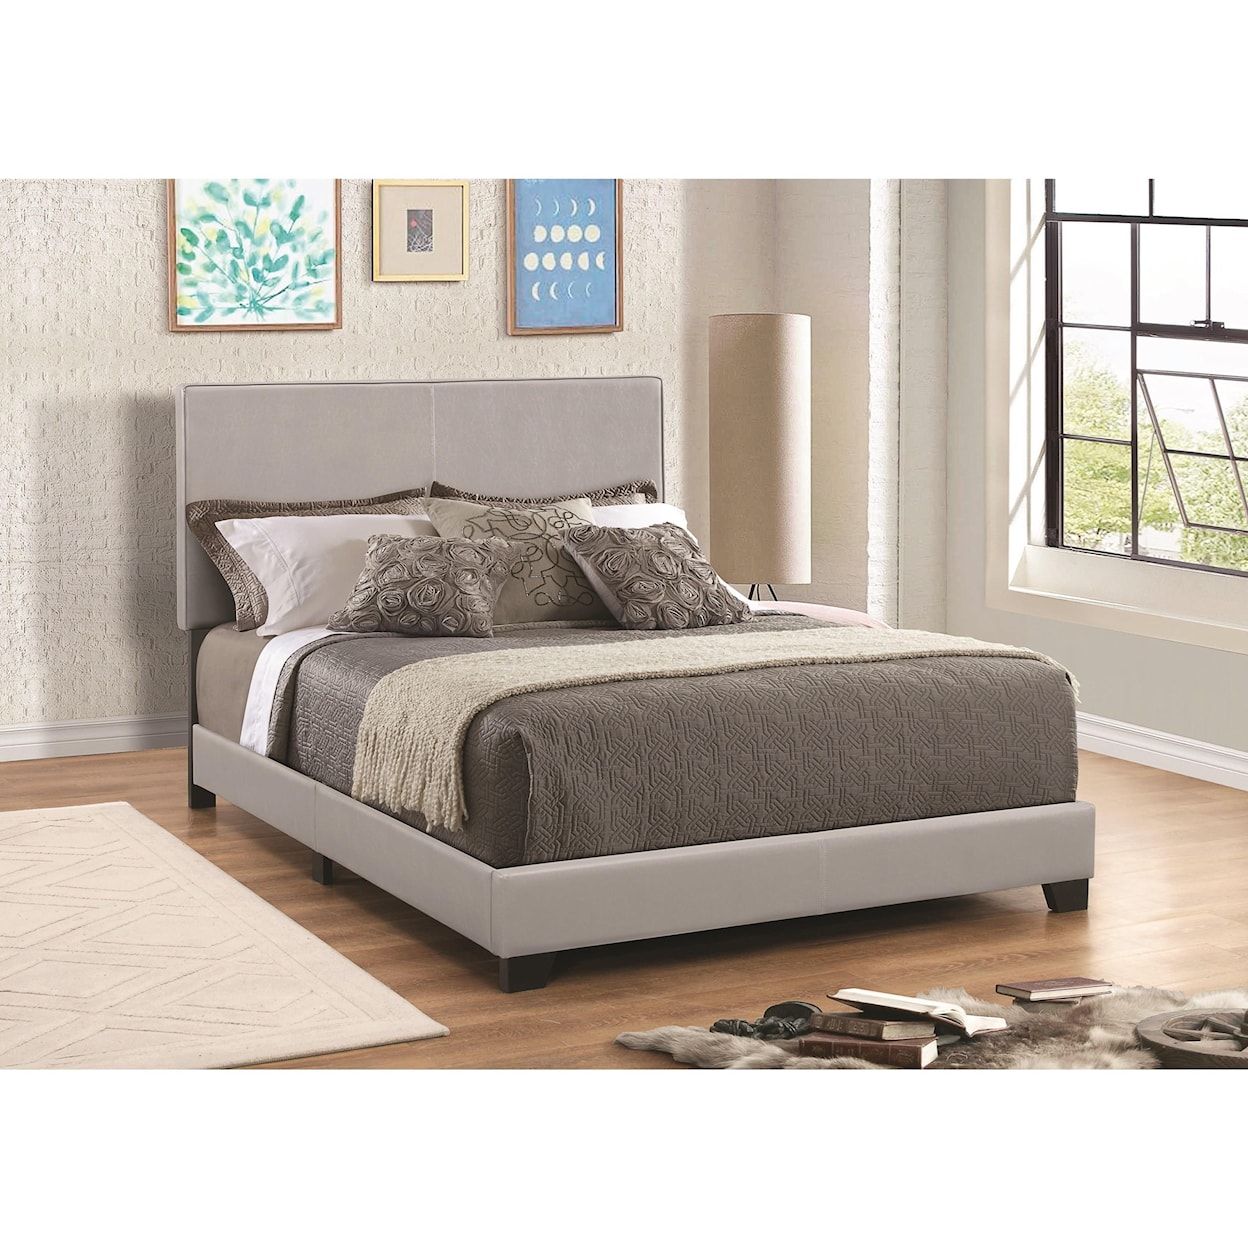 Coaster Dorian Grey Full Bed